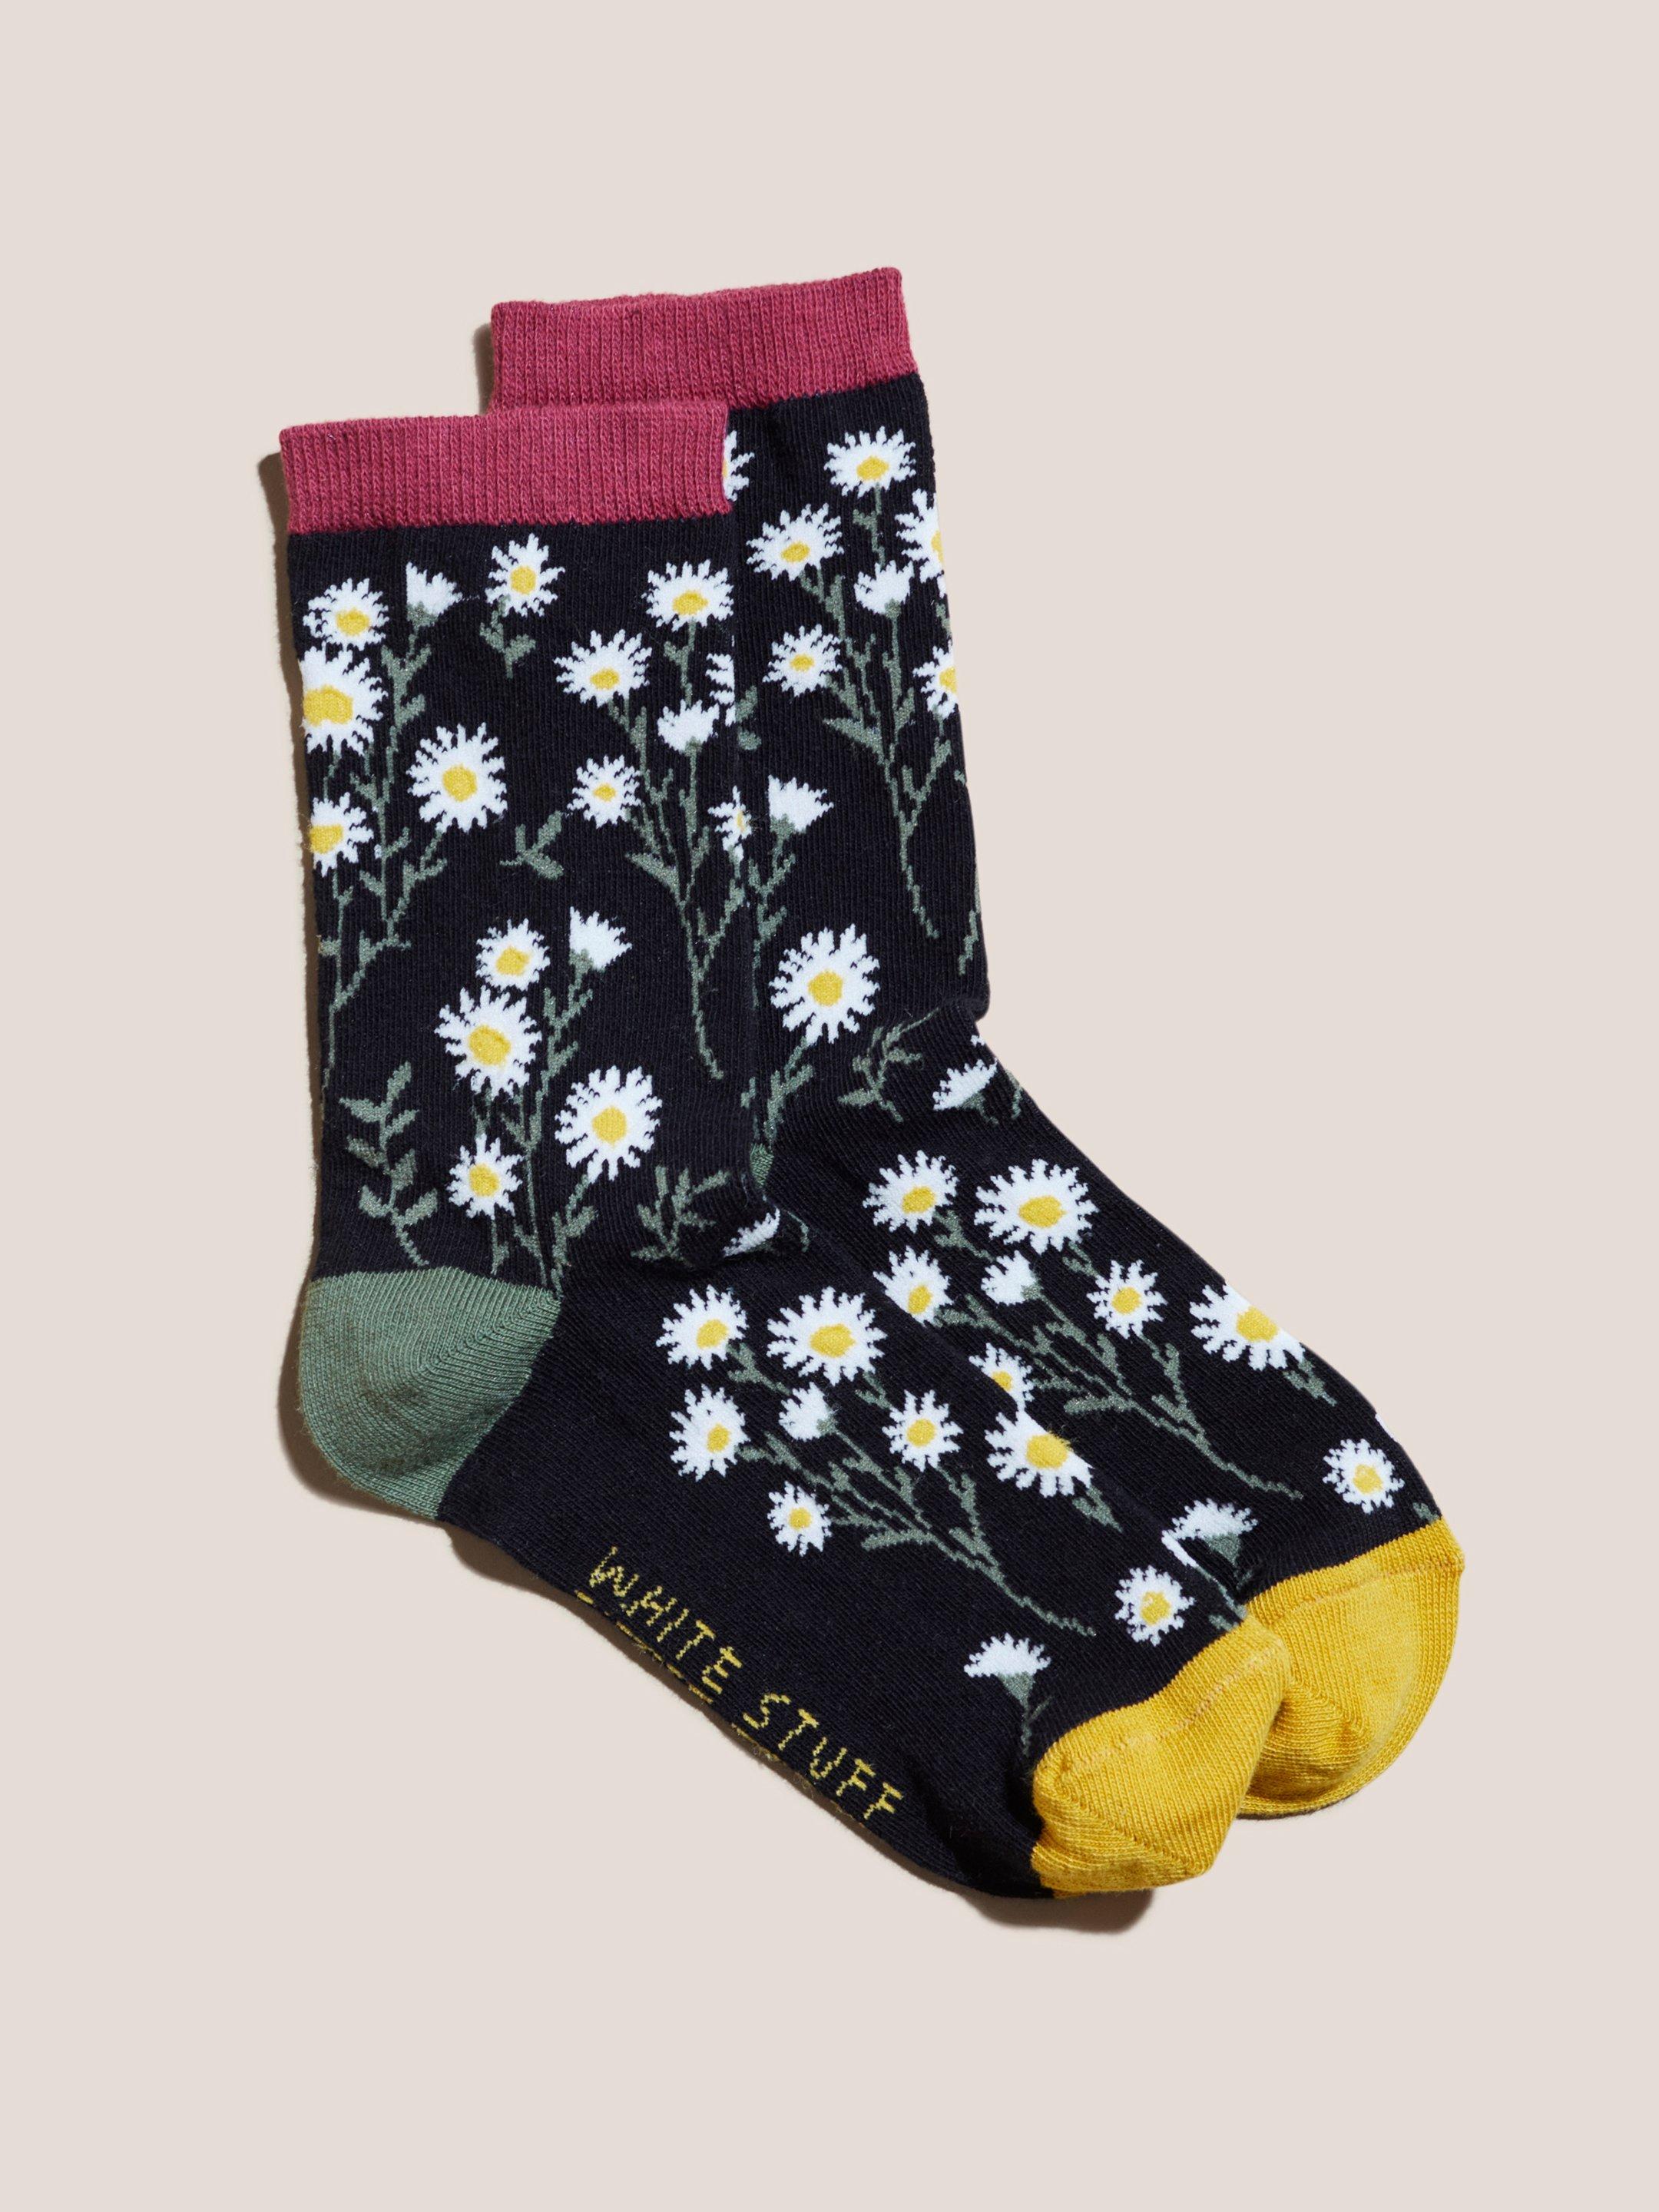 Spring Flower Socks in BLK MLT - FLAT FRONT